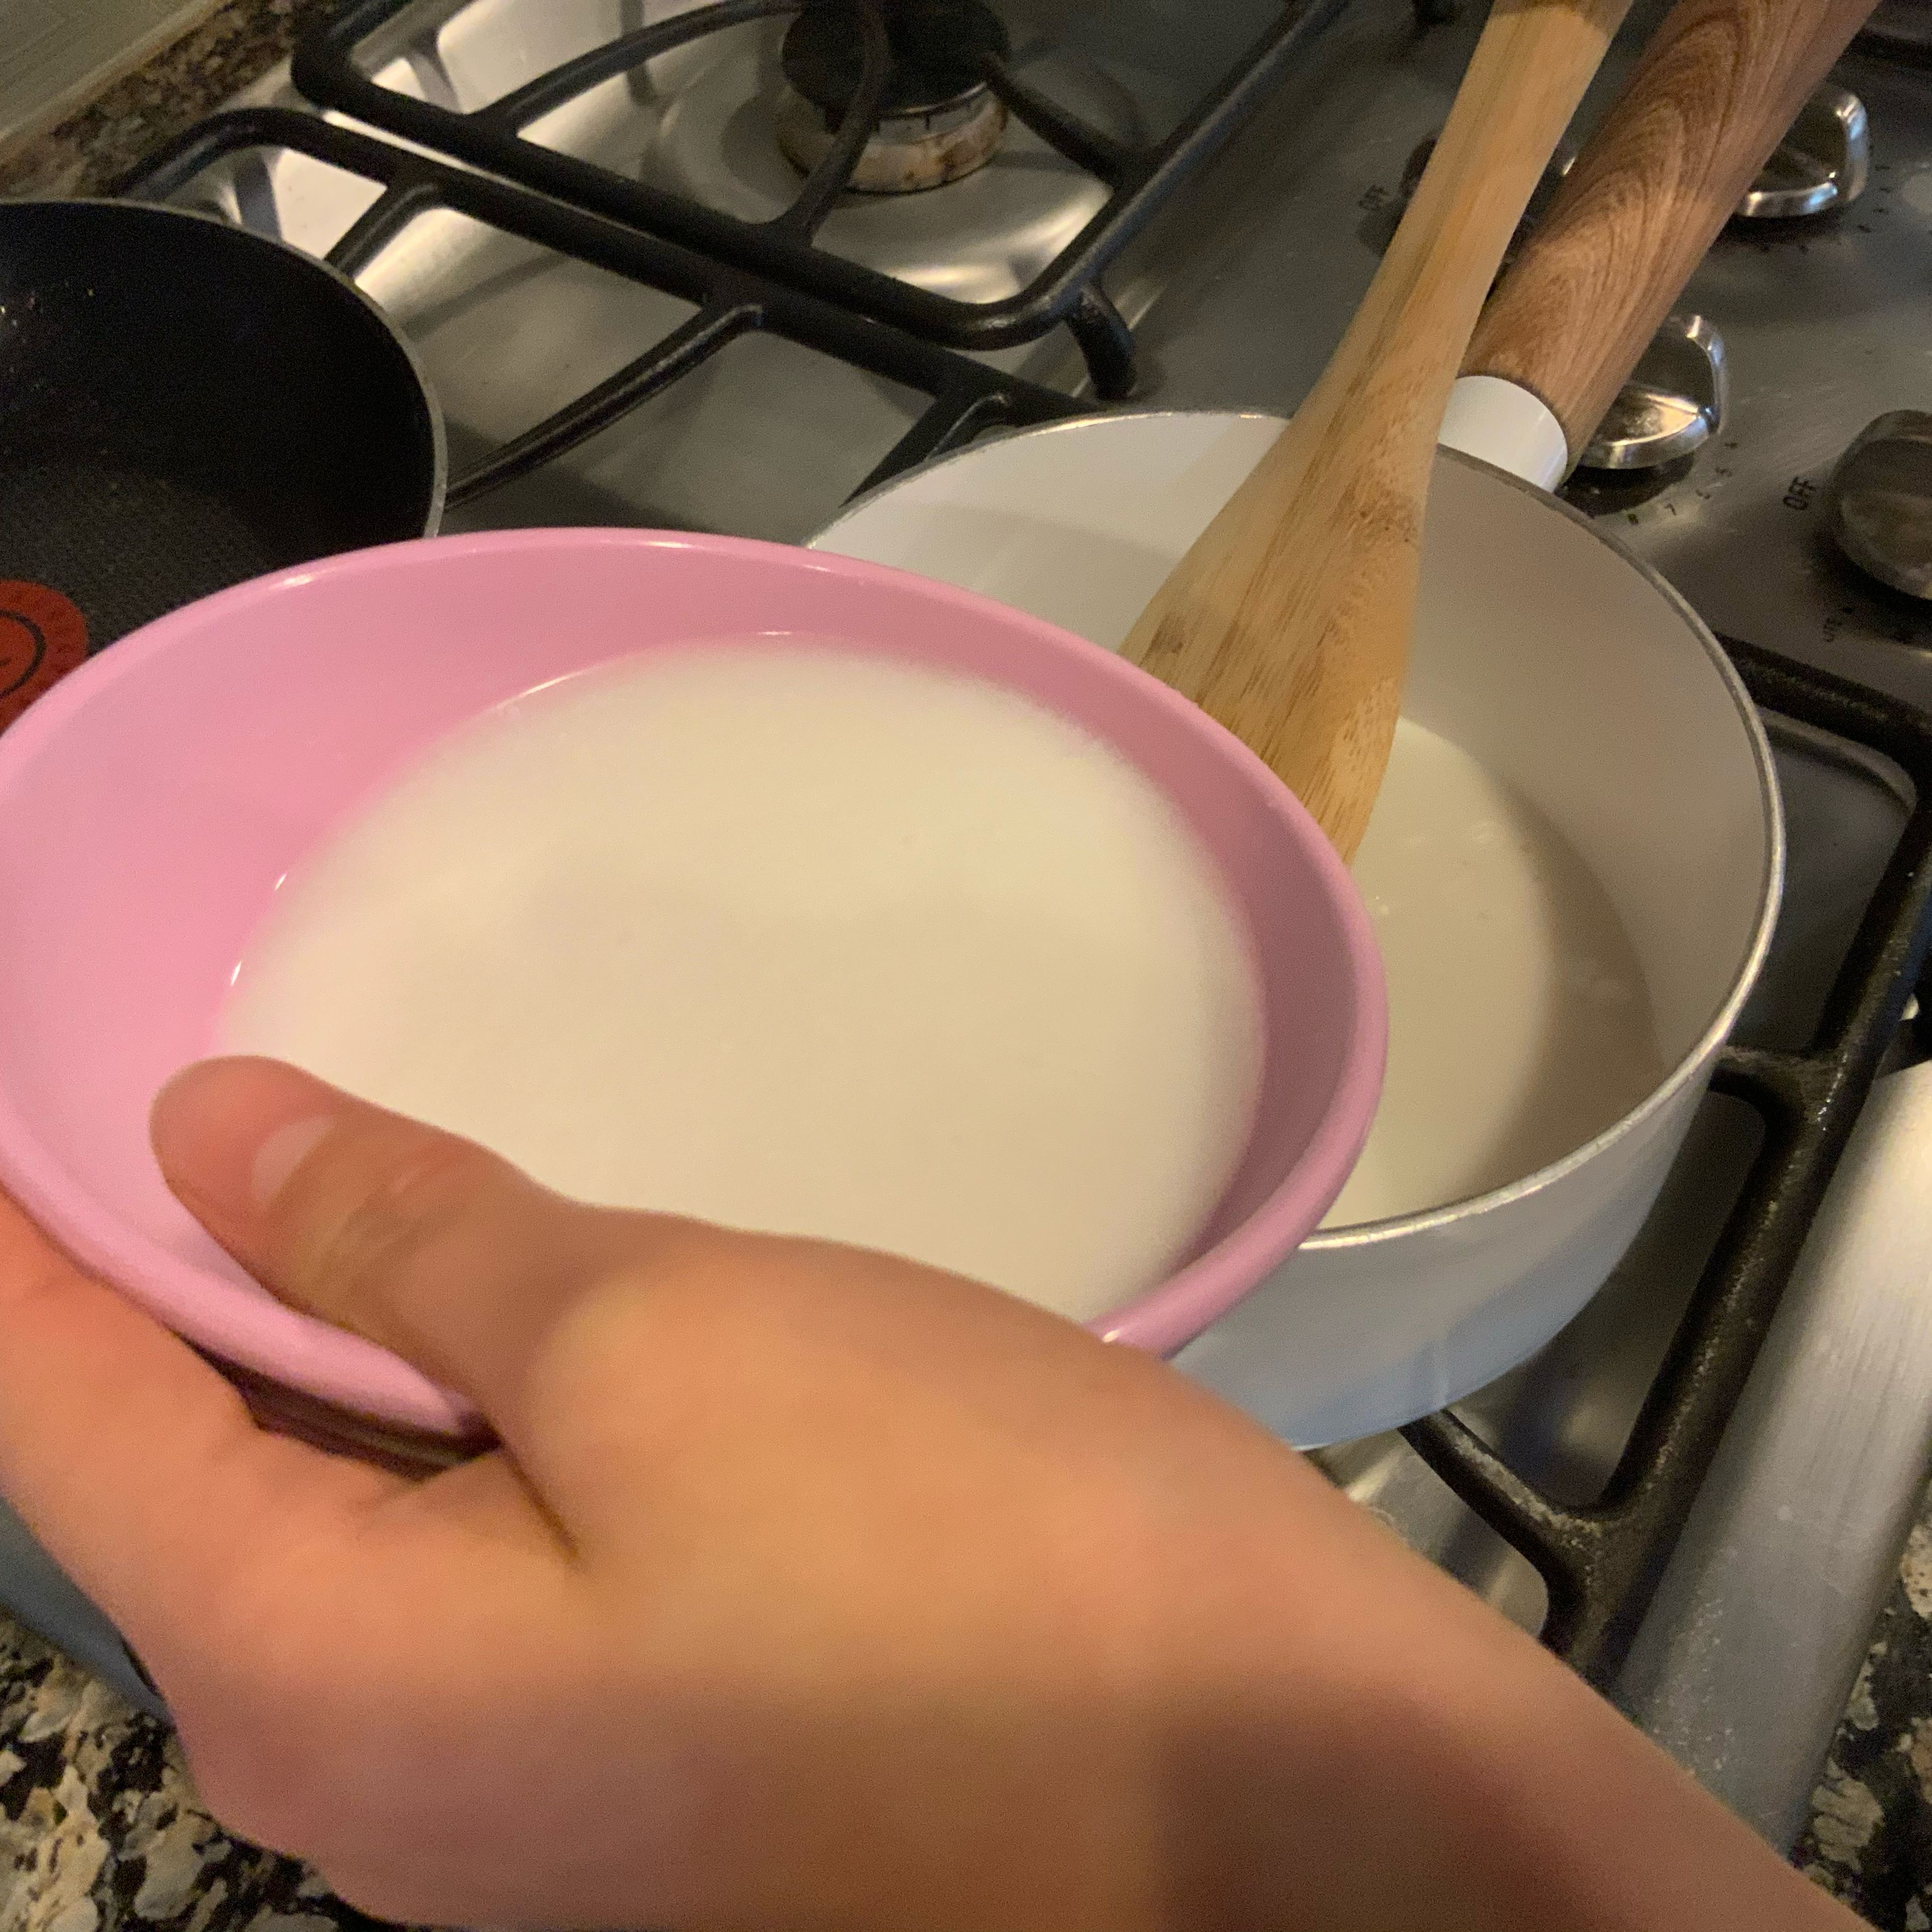 In a saucepan, put sugar, cornstarch, and salt. Then stir in milk. Bring to a boil, stirring constantly over medium heat. Cook for 2 to 3 minutes until mixture thickens. Stir in vanilla.